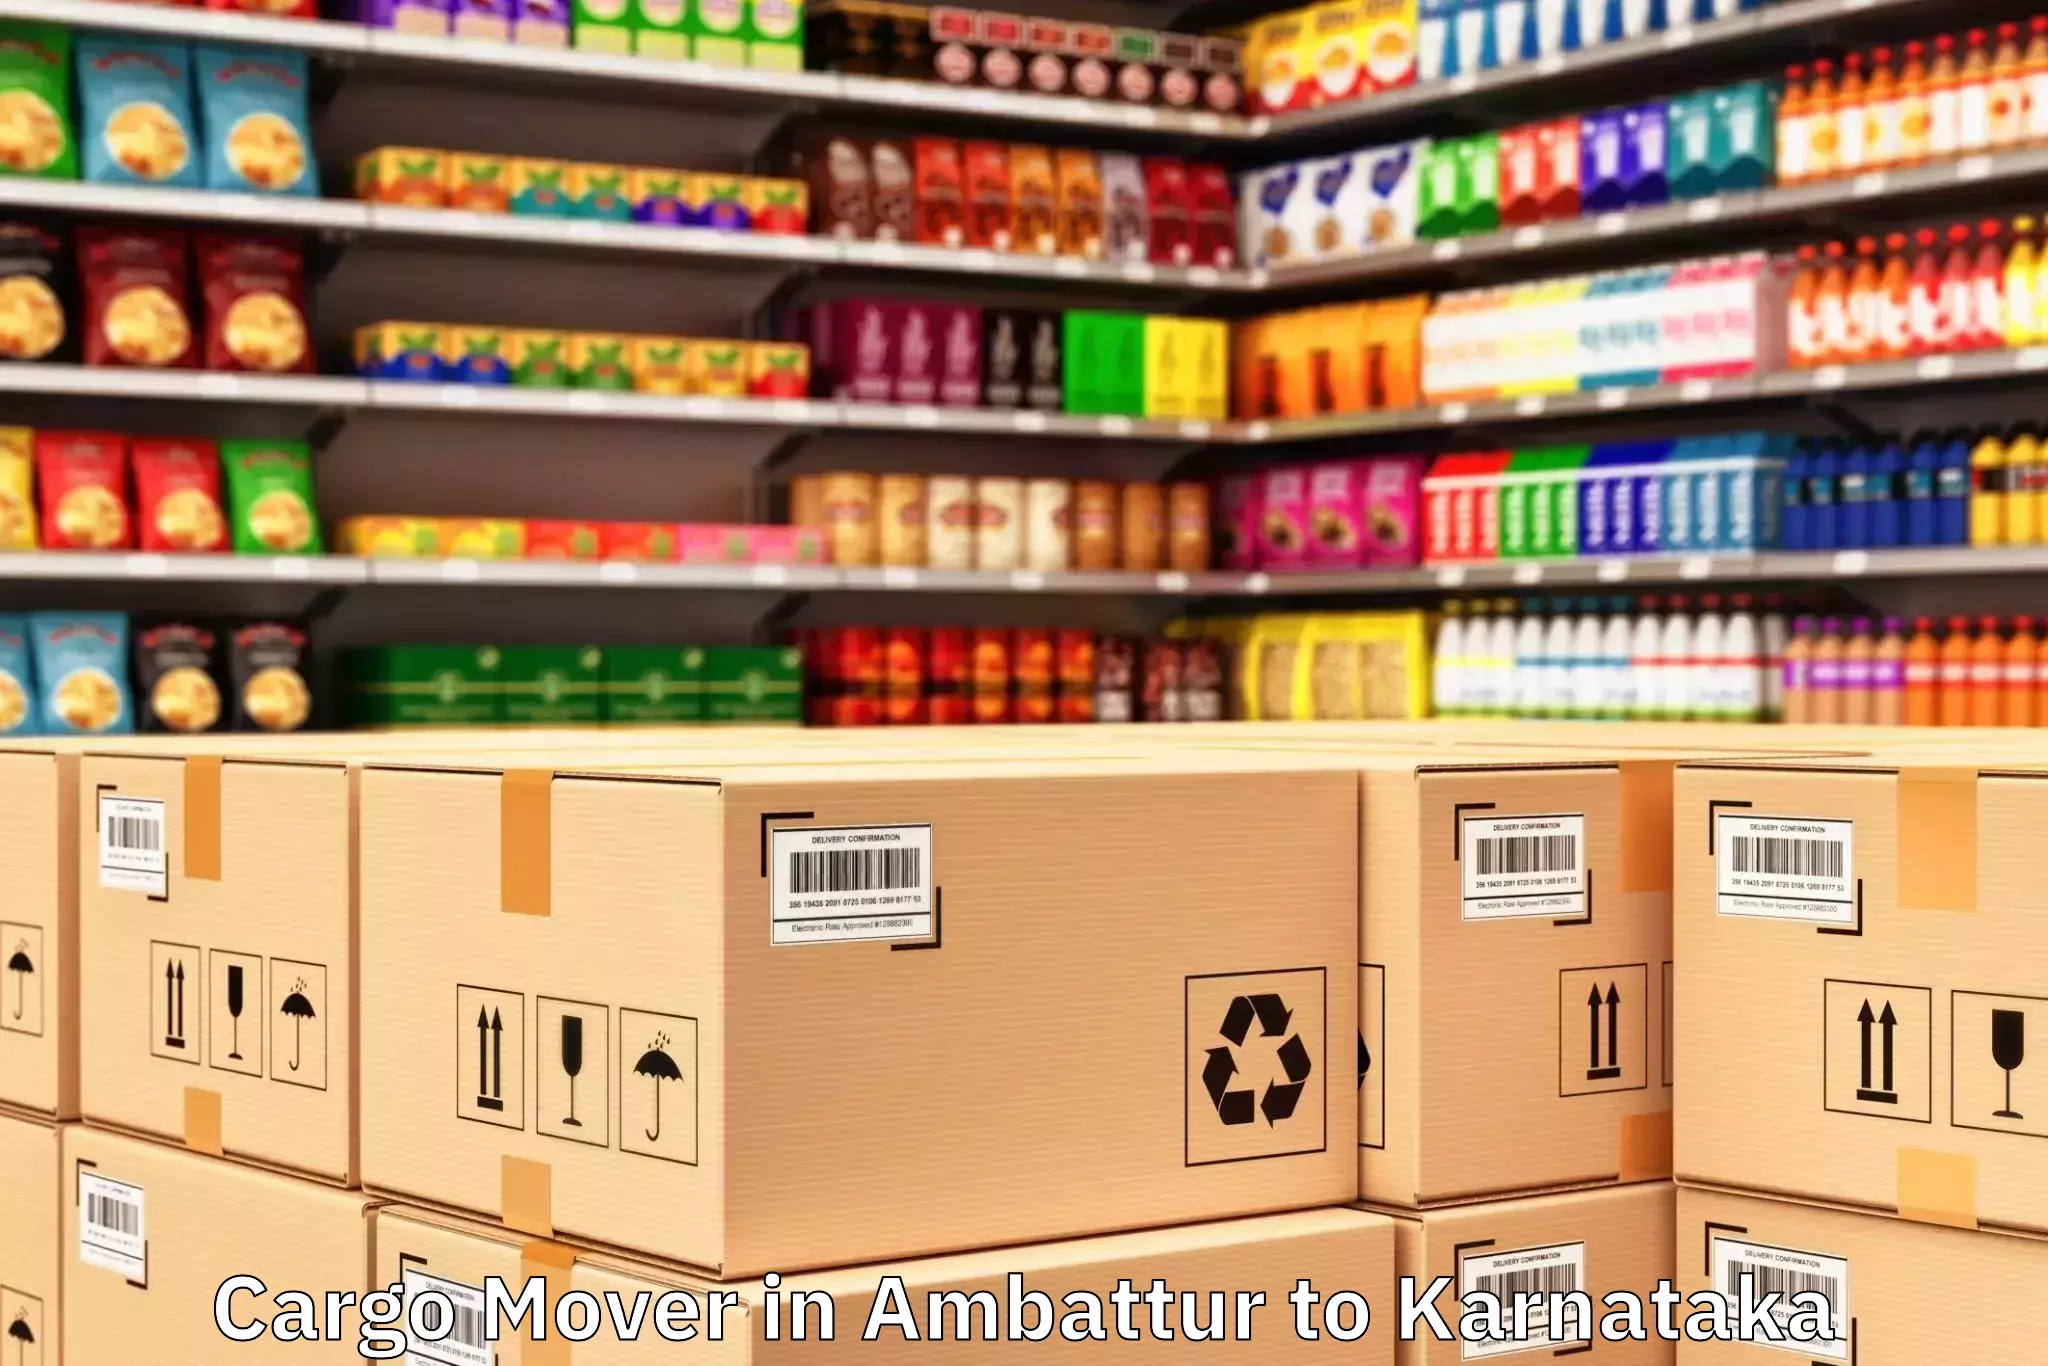 Top Ambattur to Karnataka Cargo Mover Available